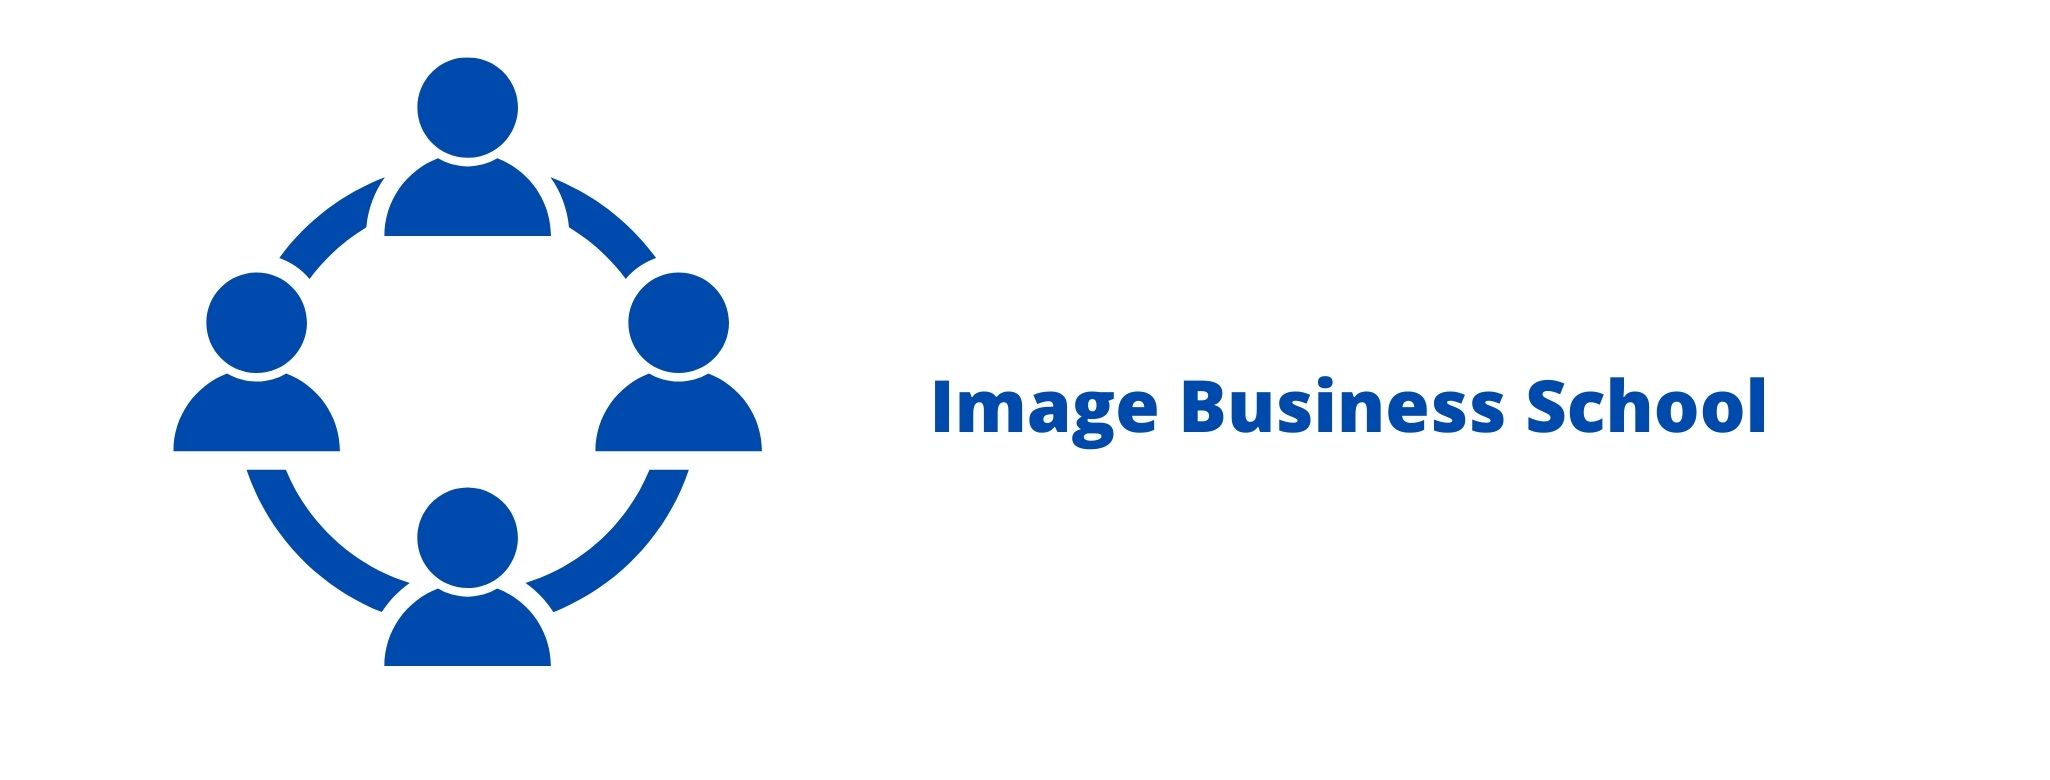 Image Business School transparant